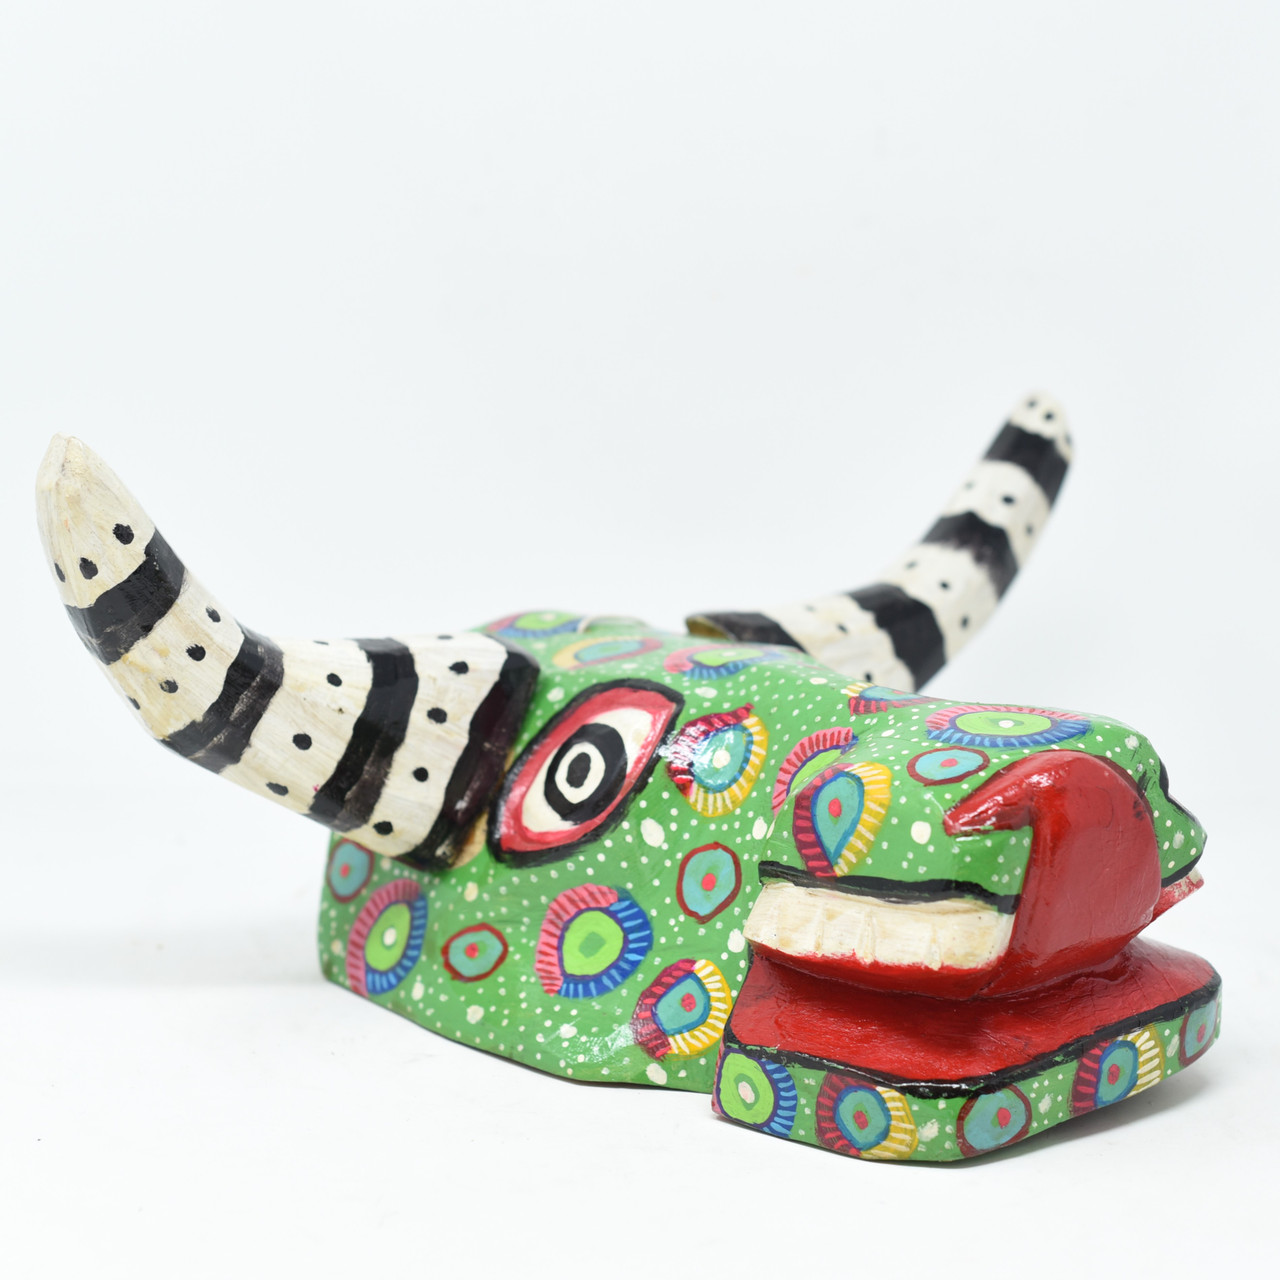 Green, Colorful Bull Mask, Whimsical Dance Mask, Hand Carved Wood Guatemala 14" x 10" x 6"